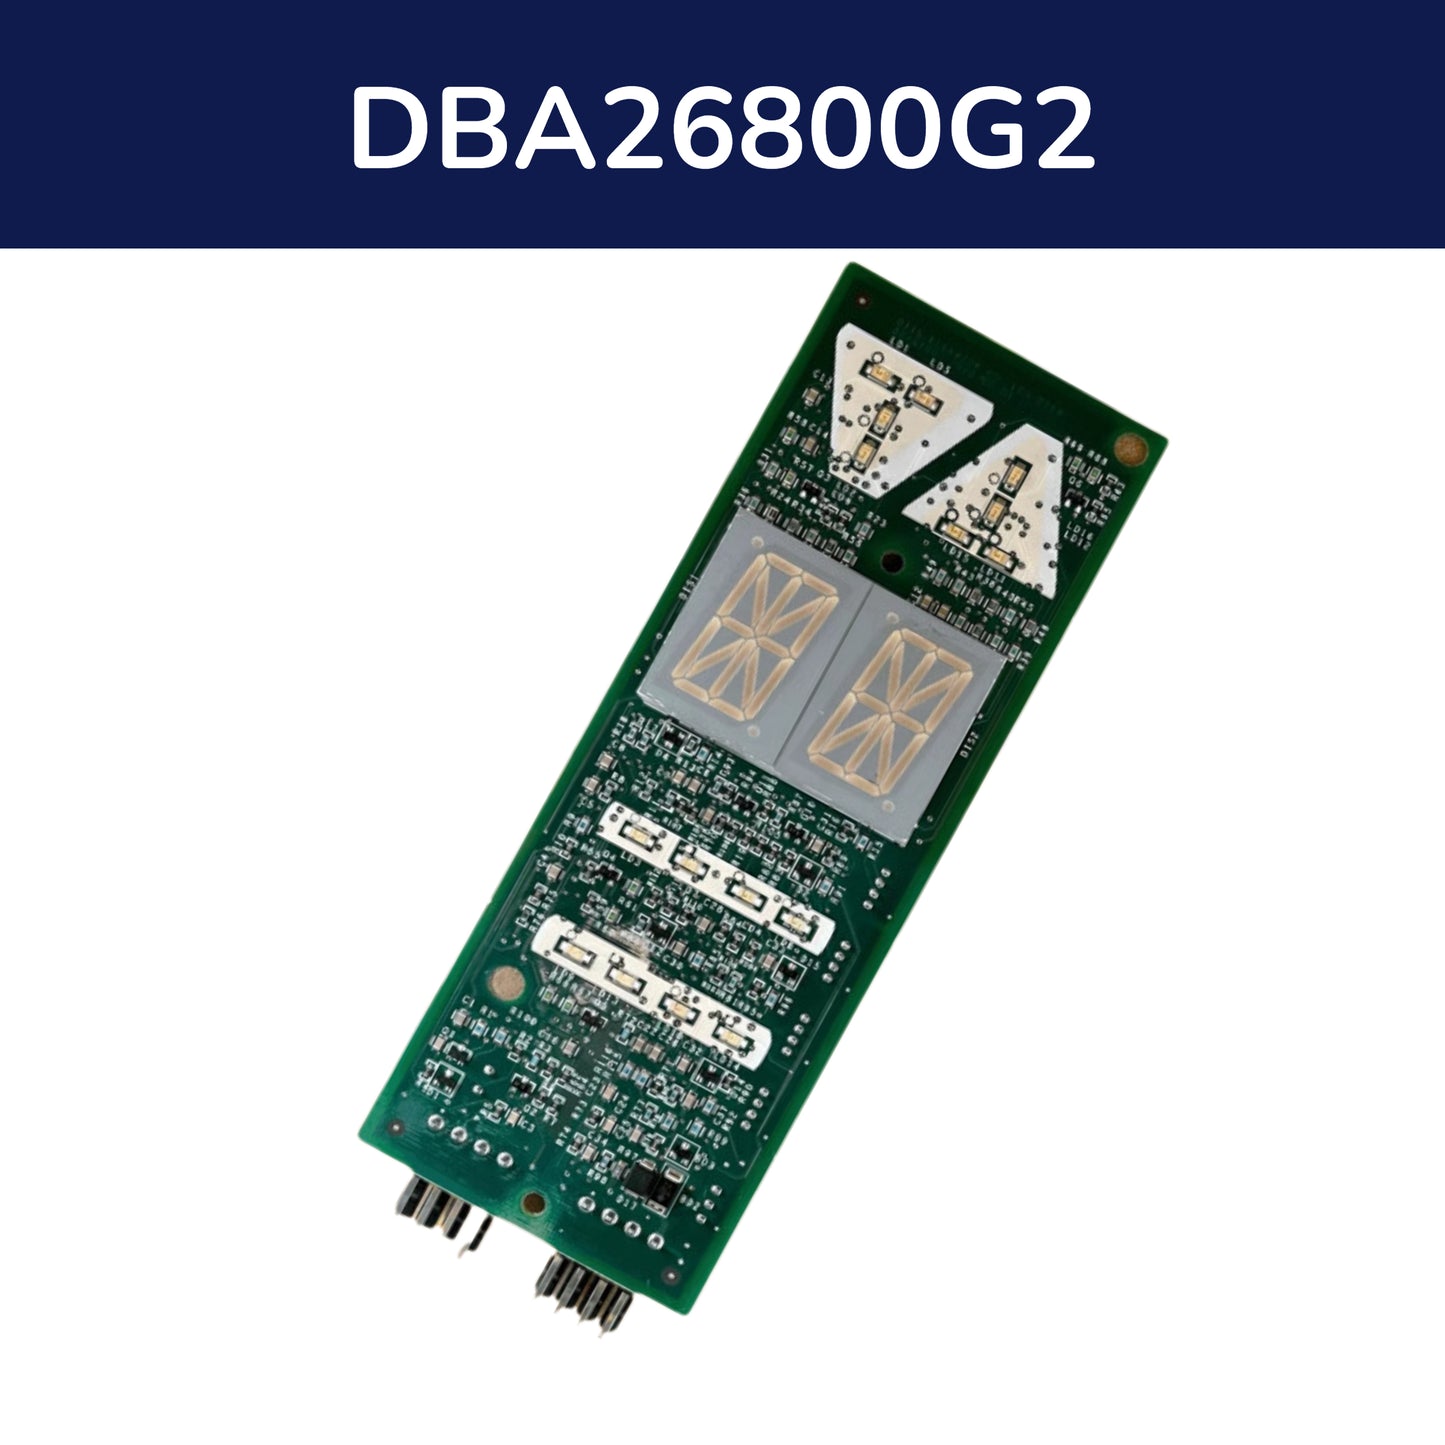 OTIS Elevator Display Board DBA26800G1/G2